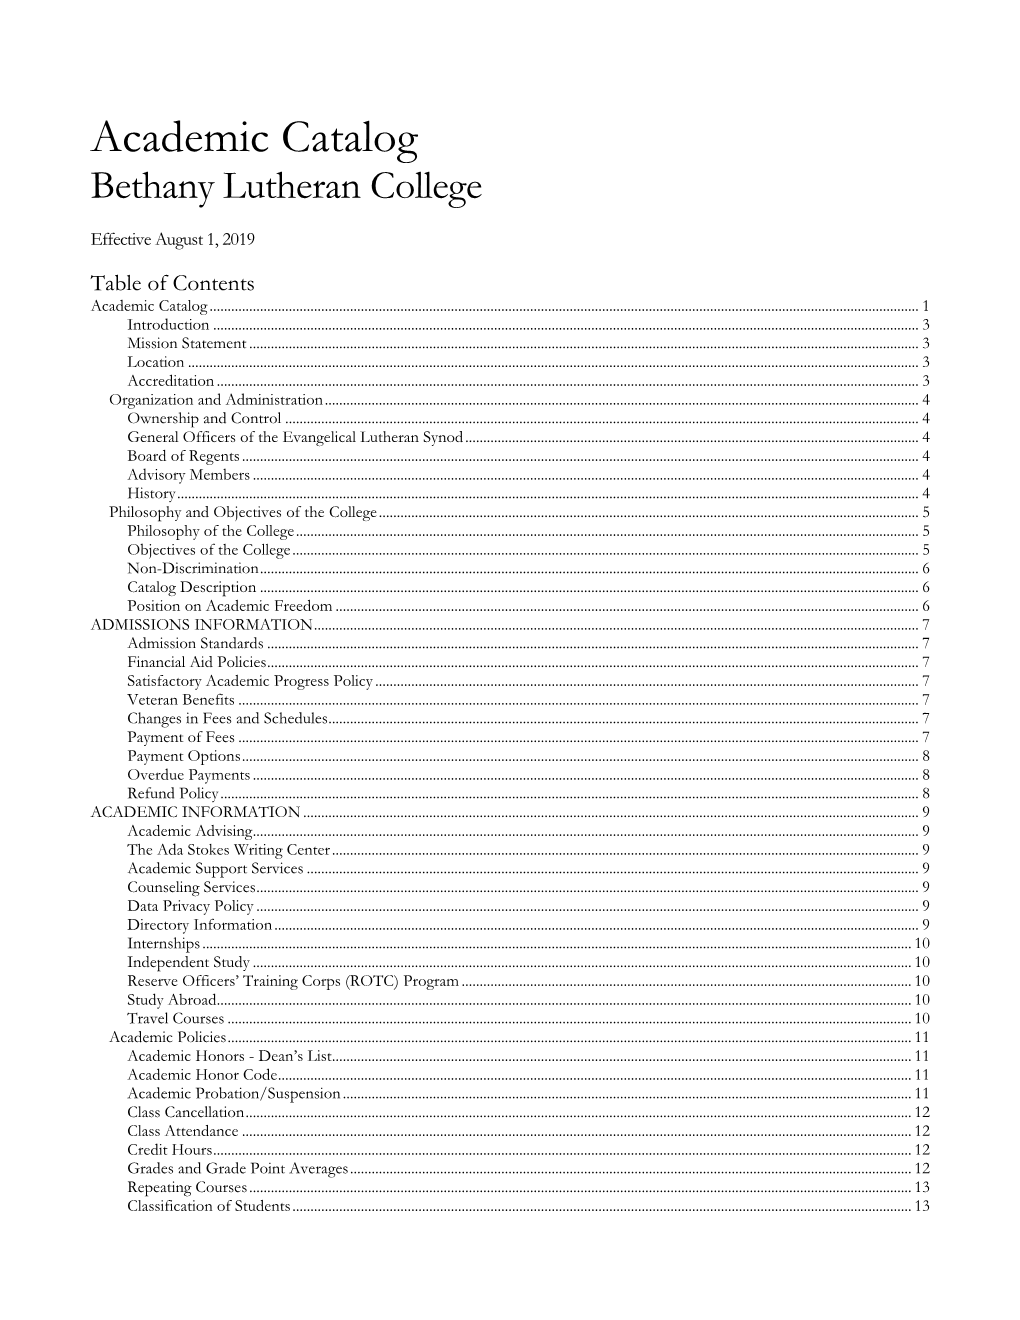 2019 Academic Catalog